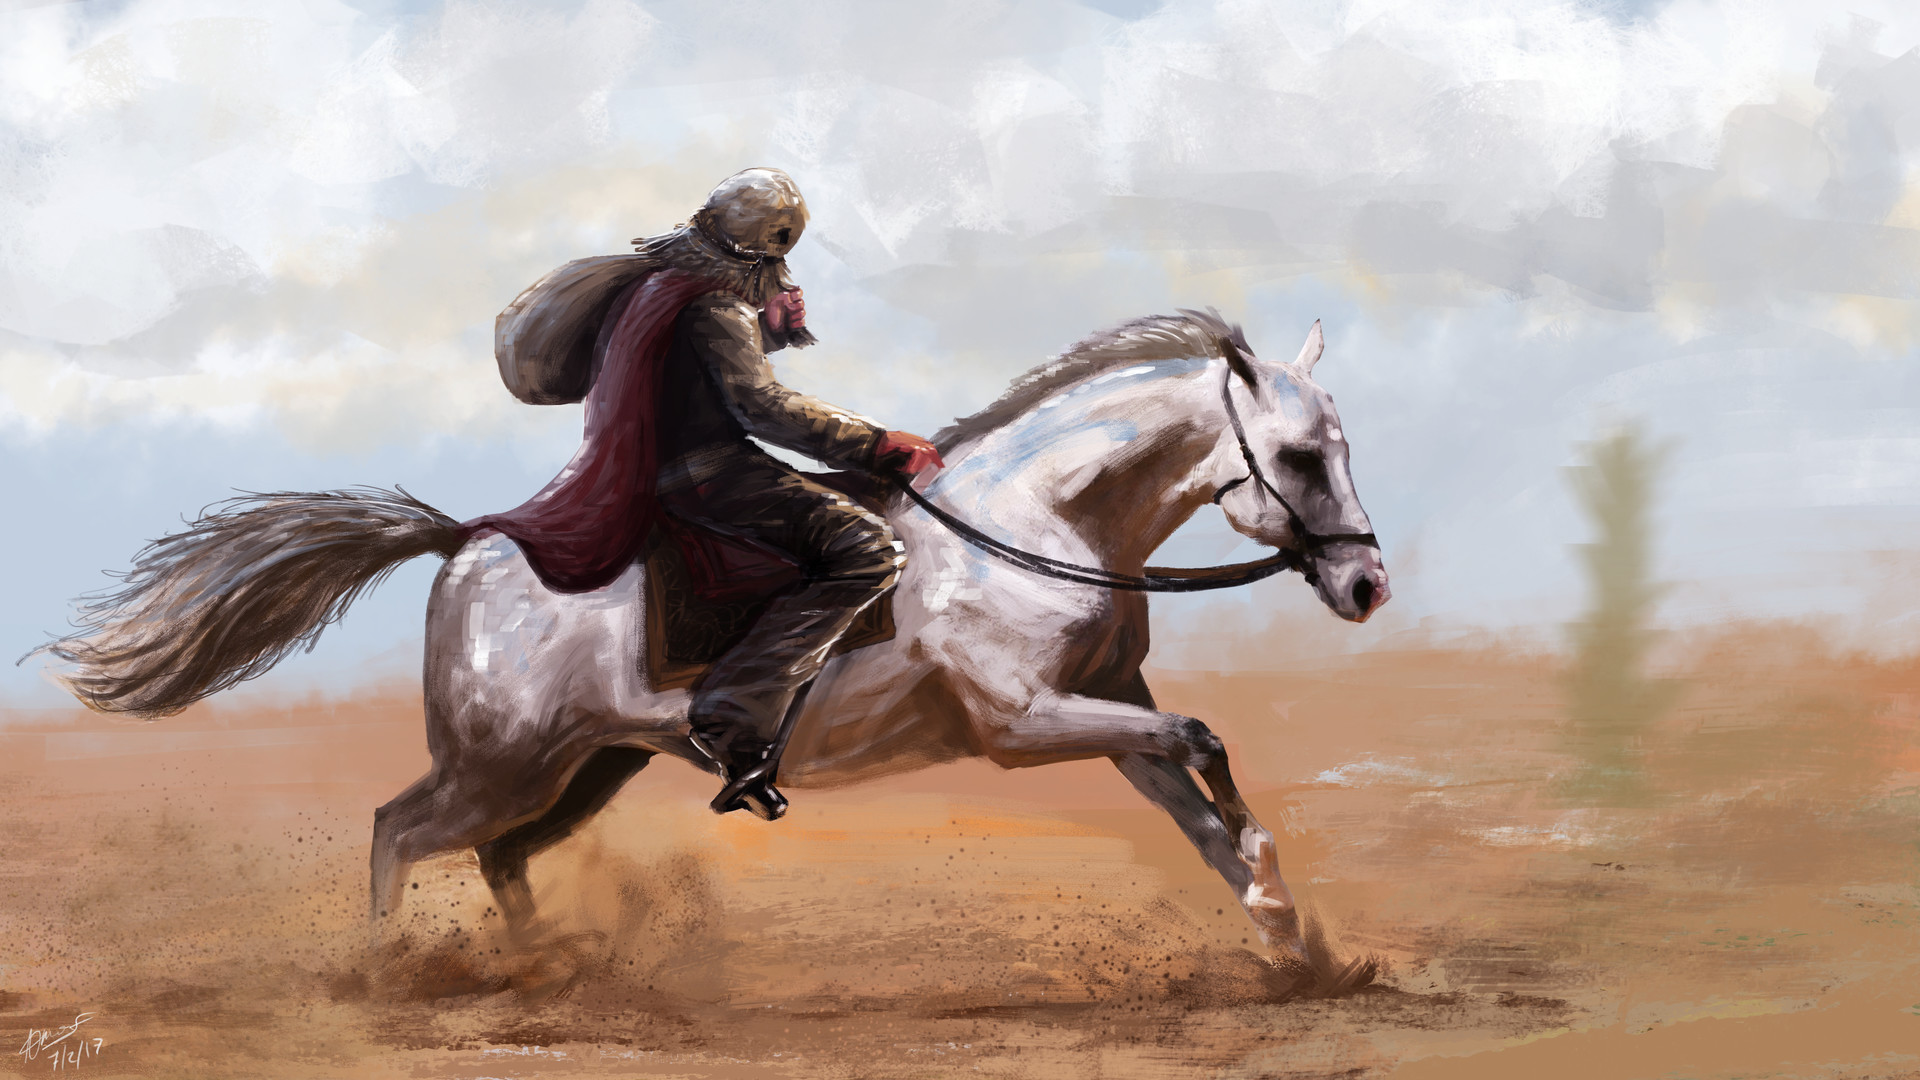 Ride the chariot. The Horse Rider картина Автор. The Riders. Светлое прошлое Райдер. Rider светлая тема.